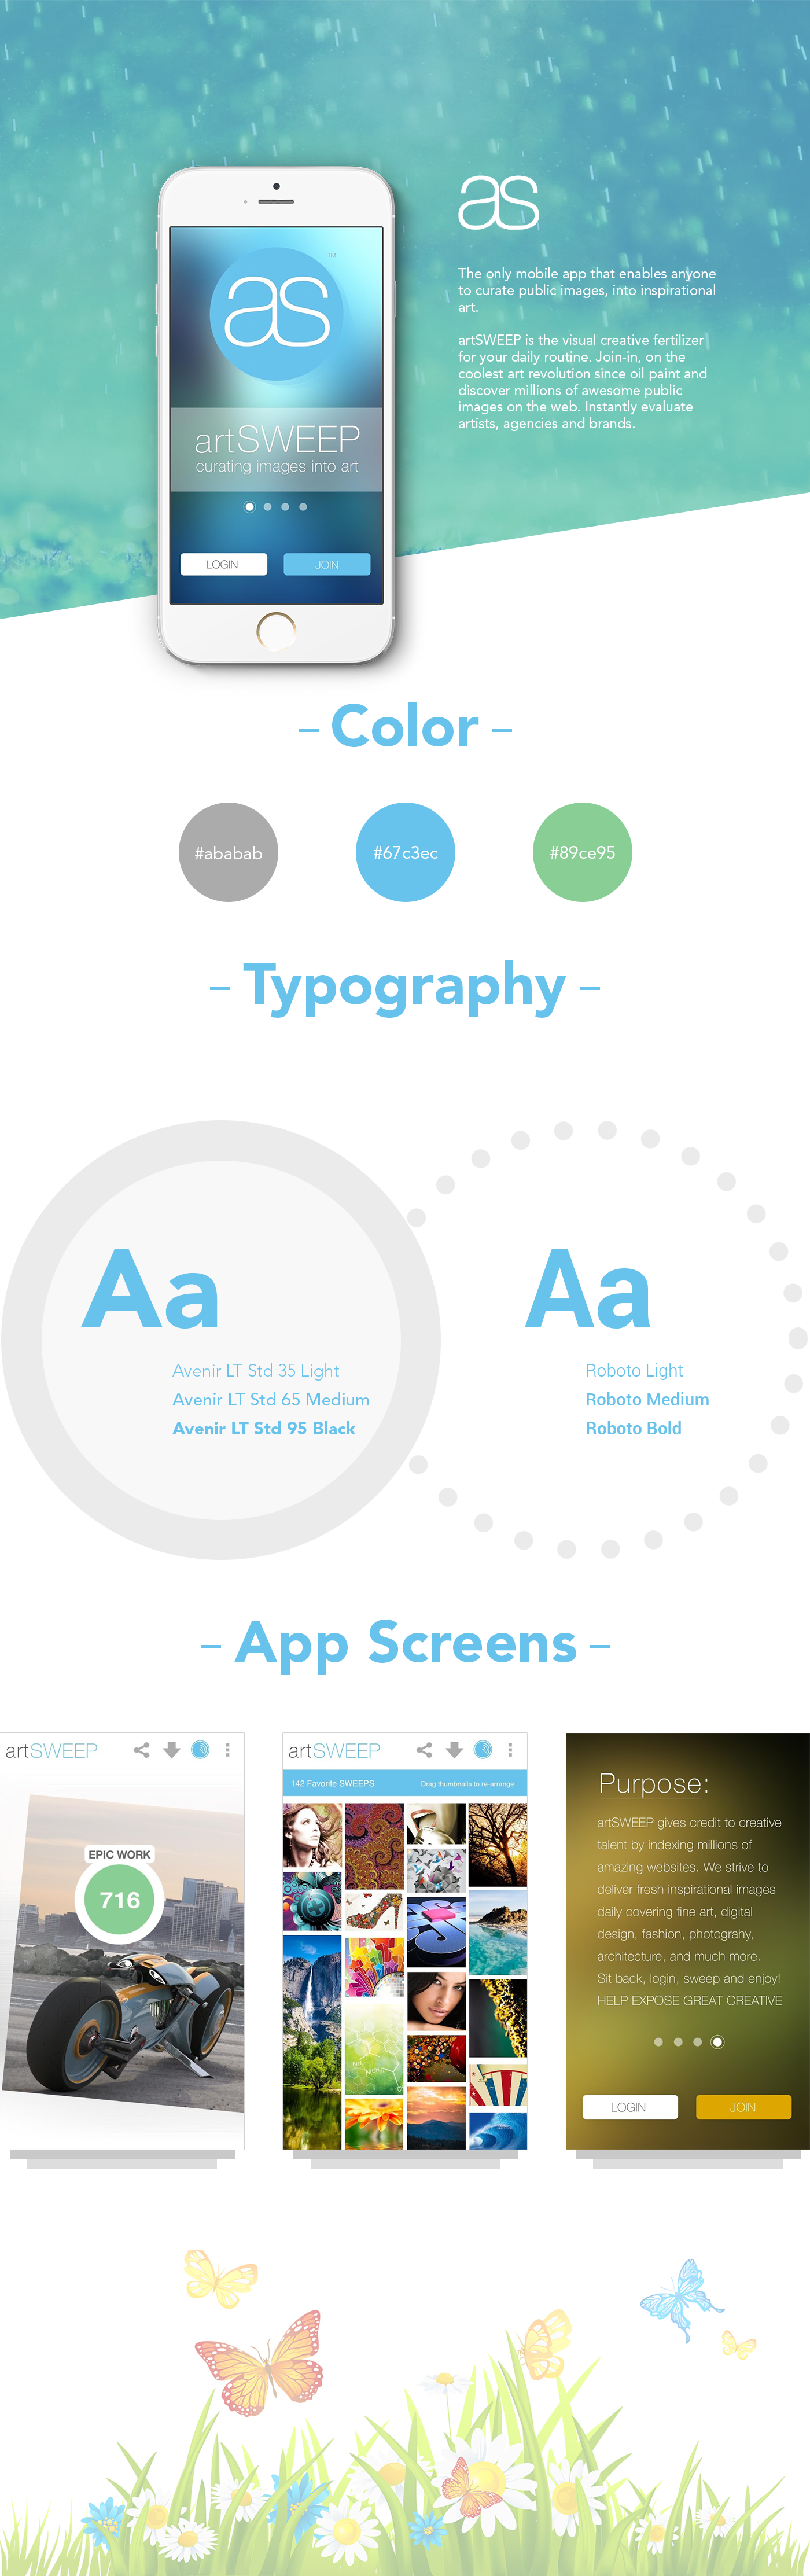 Social app Mobile app Android App UI ux user interface material design app design UX design